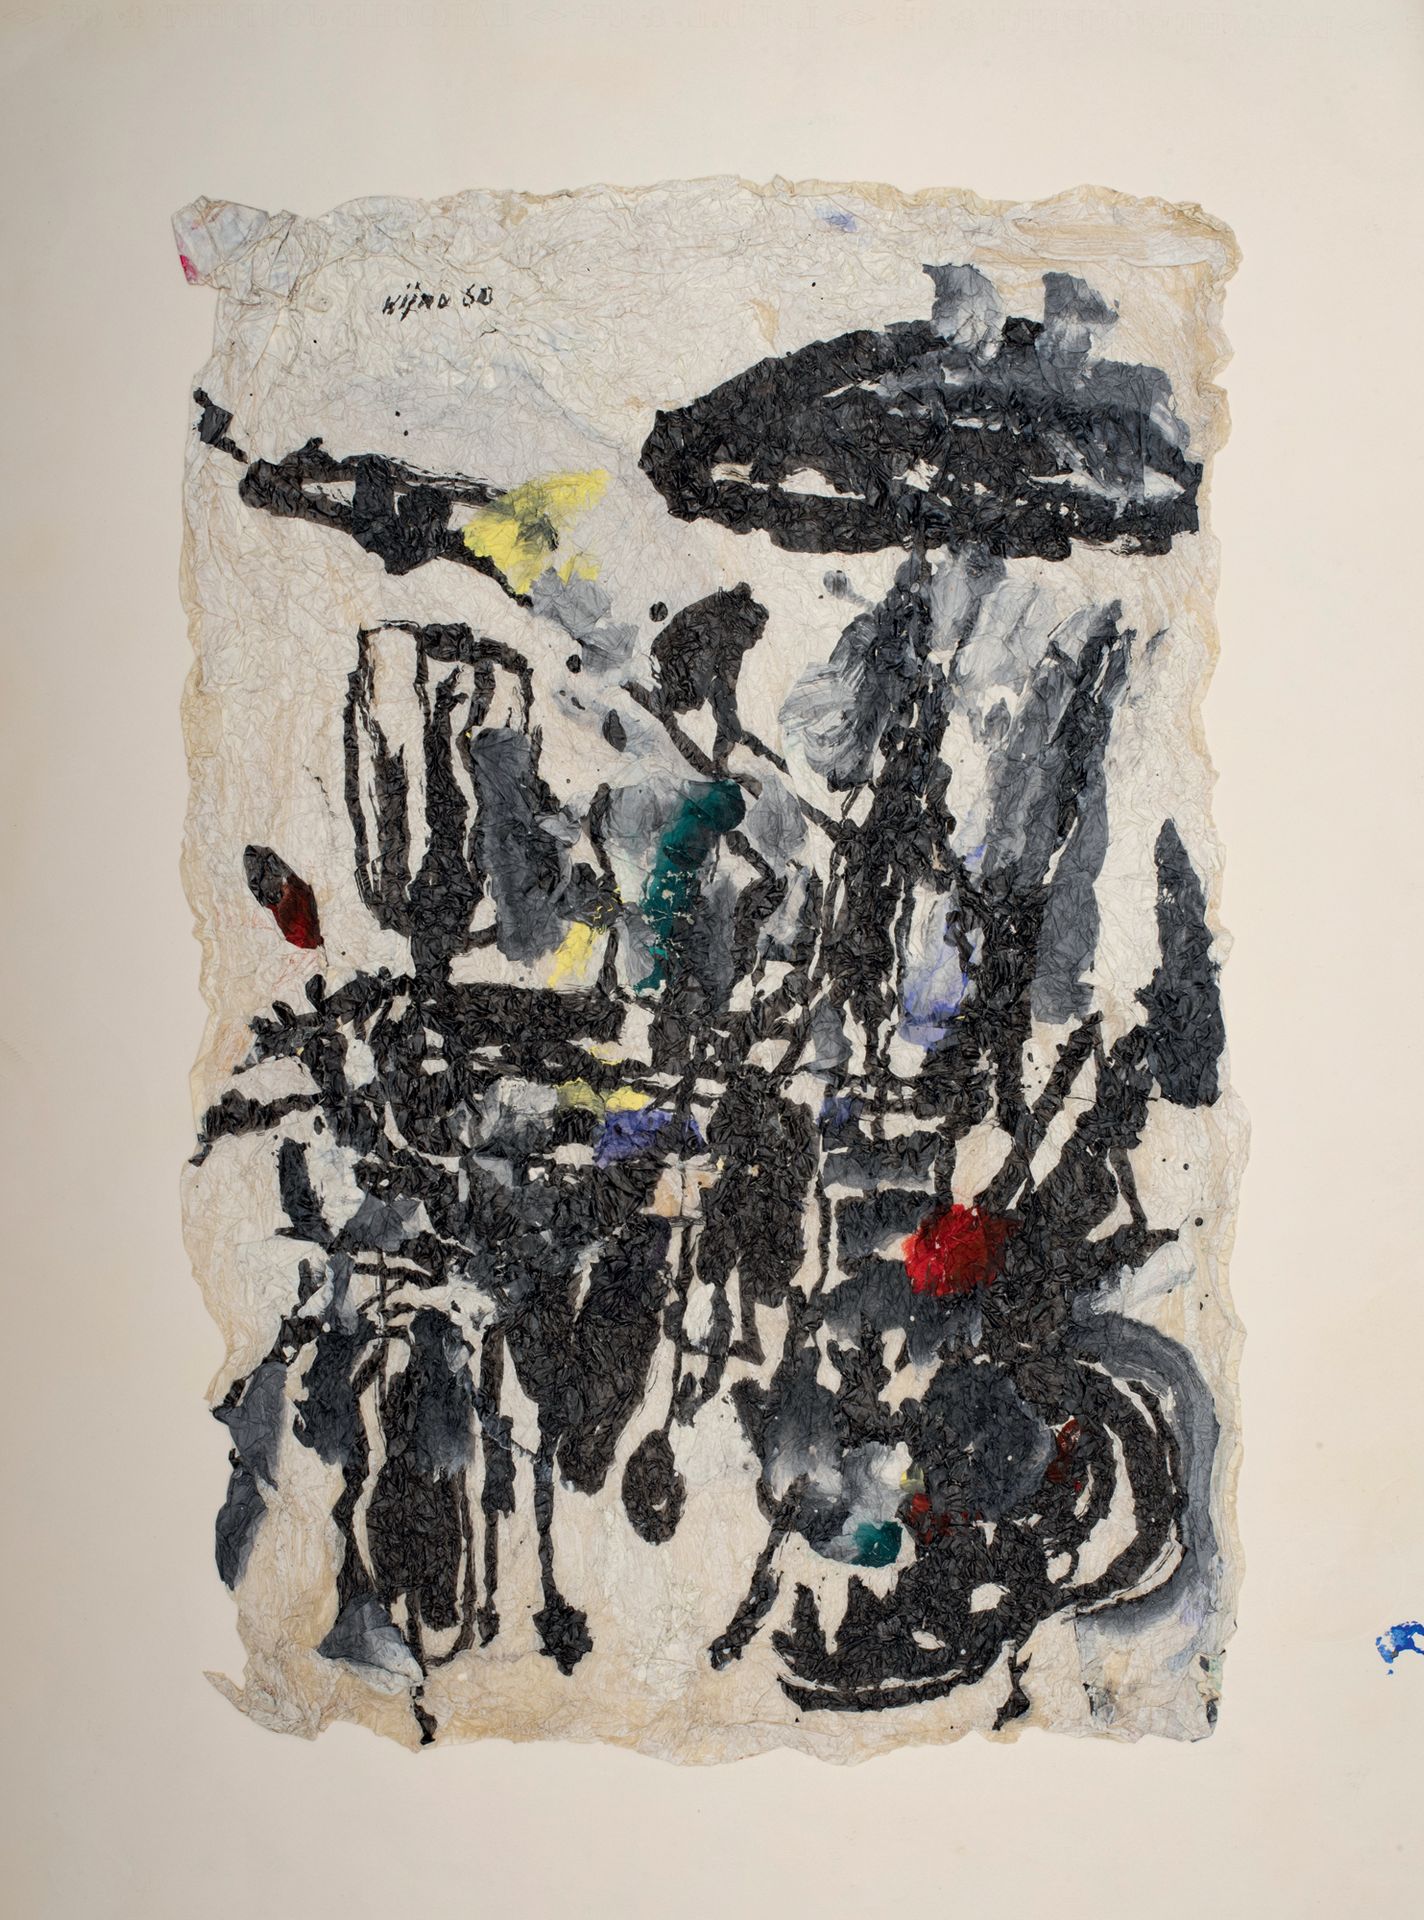 Ladislas KIJNO (1921-2012) 构成，1960年
皱纹纸上的混合媒体，左上角有签名和日期 48 x 32厘米（约）。